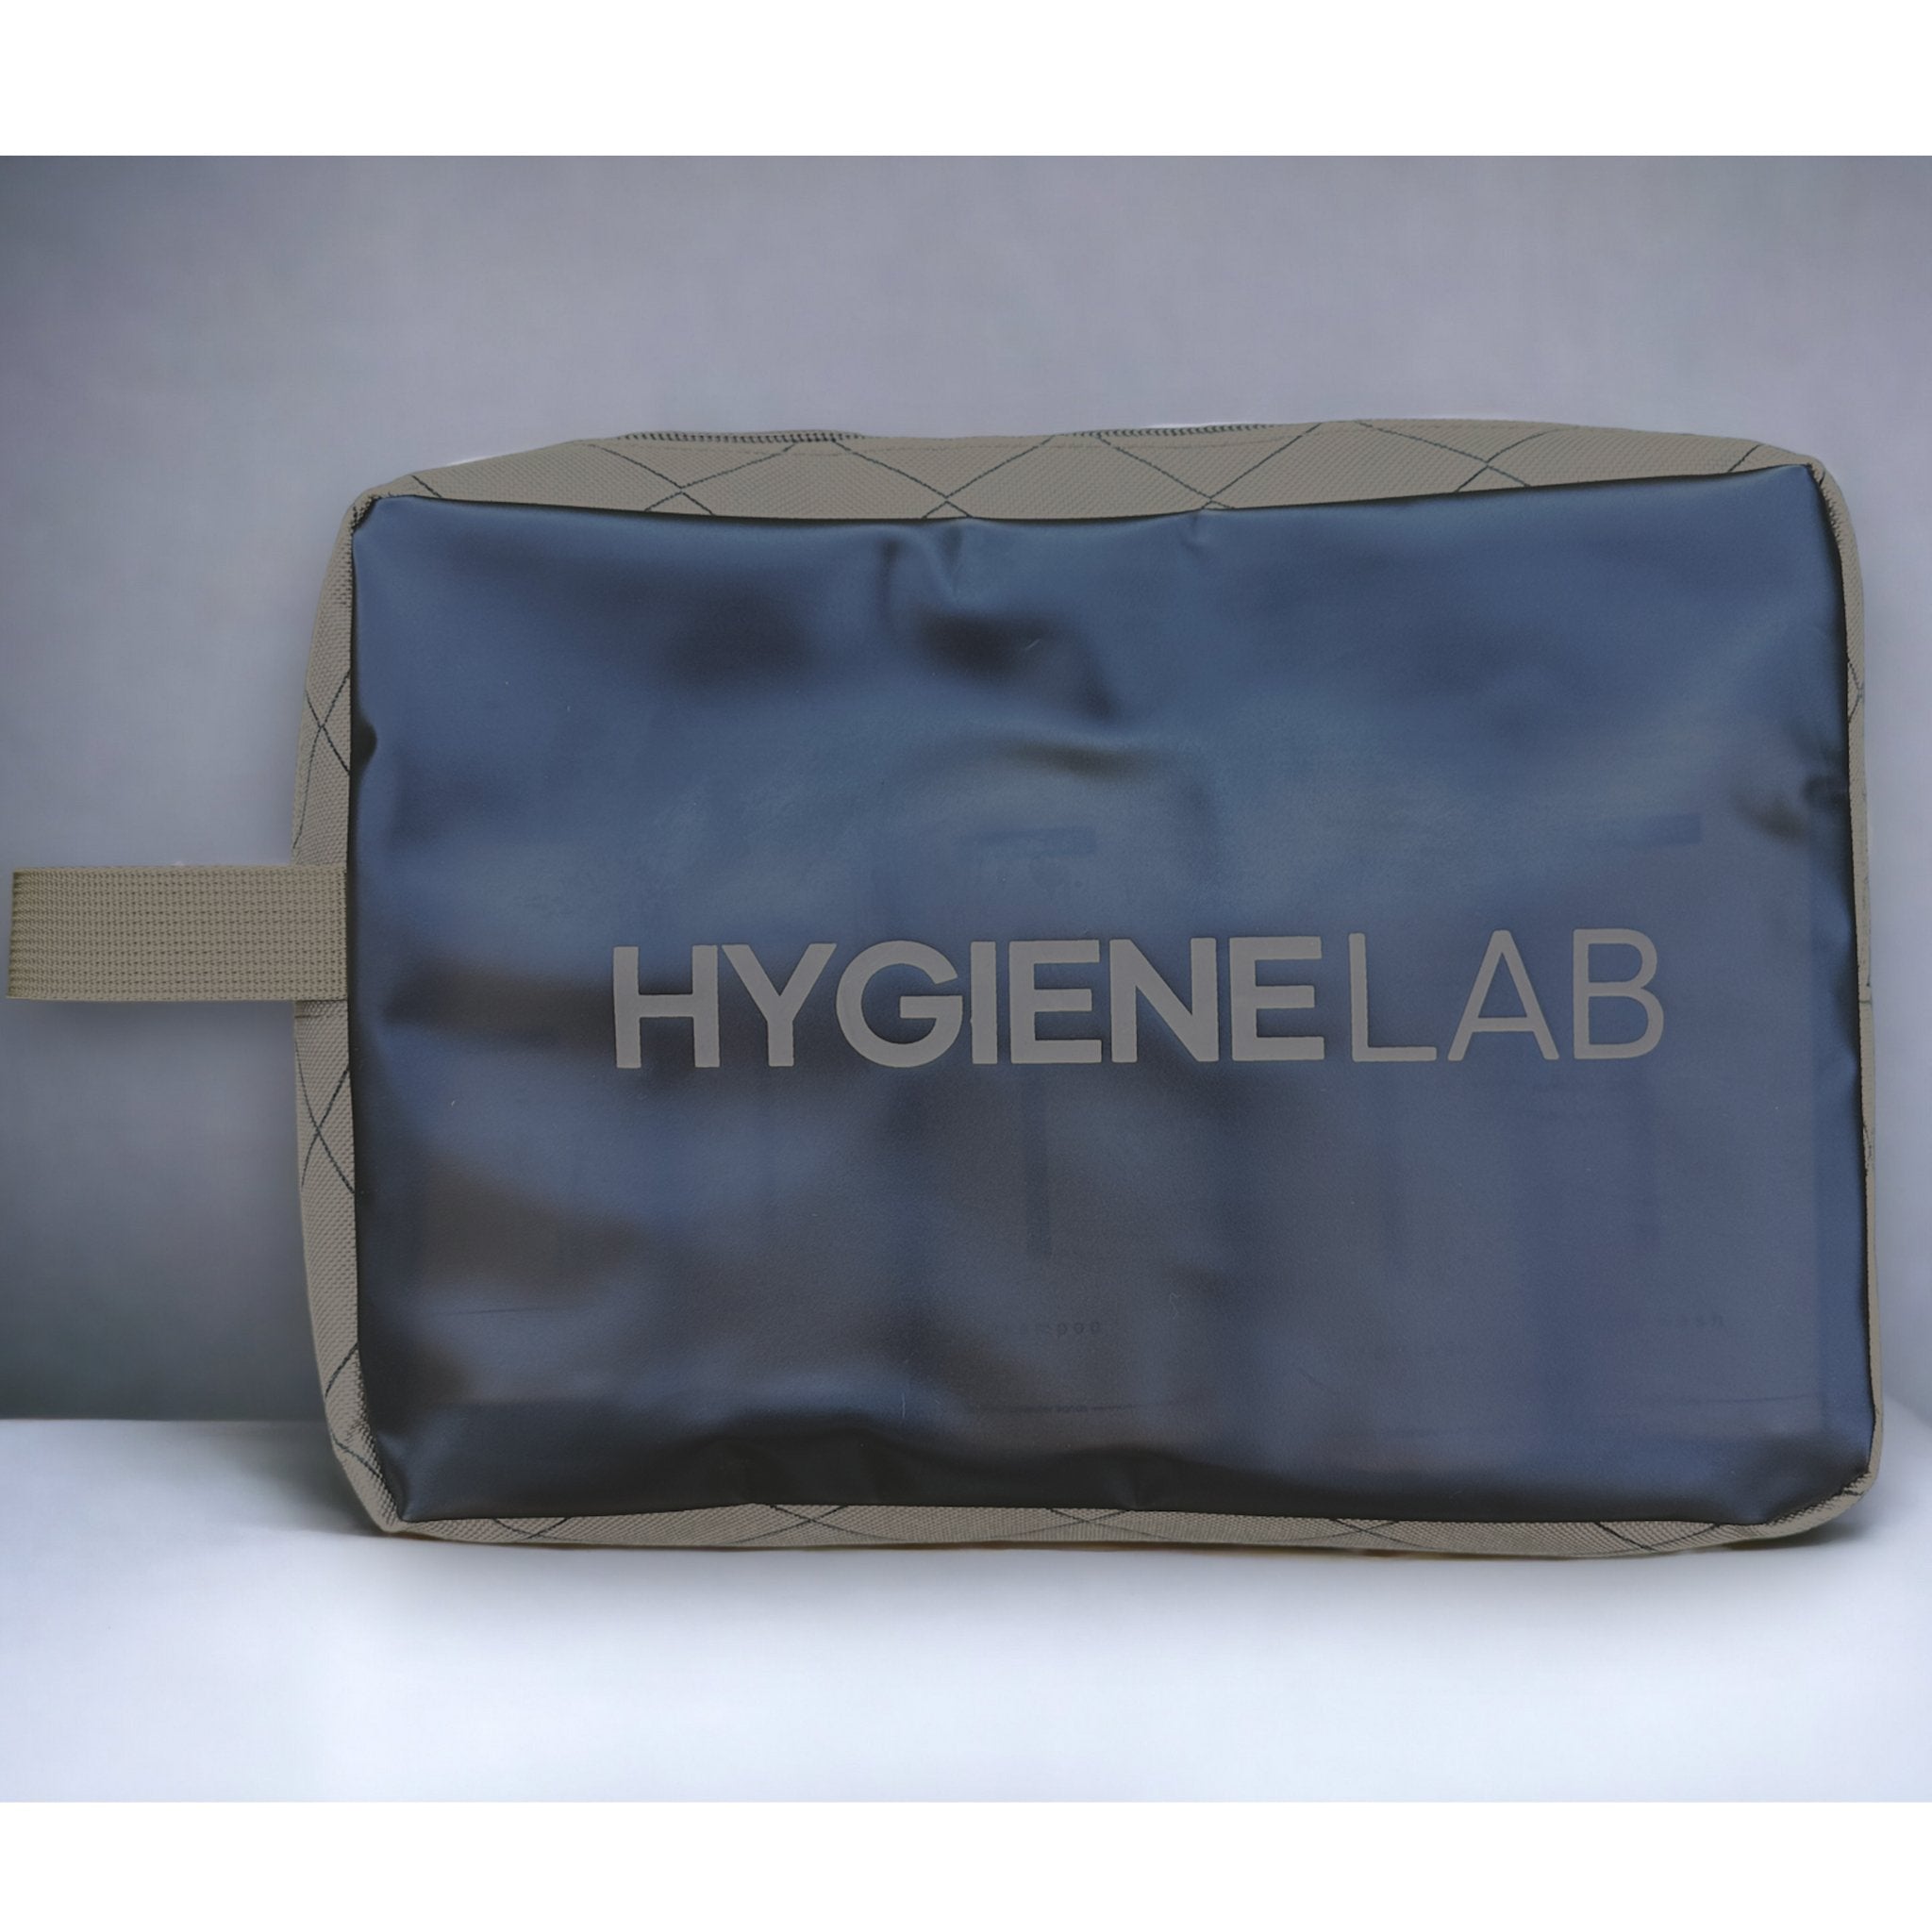 All 7 Daily Essentials + Bonus Toiletry Bag Included - HygieneLab